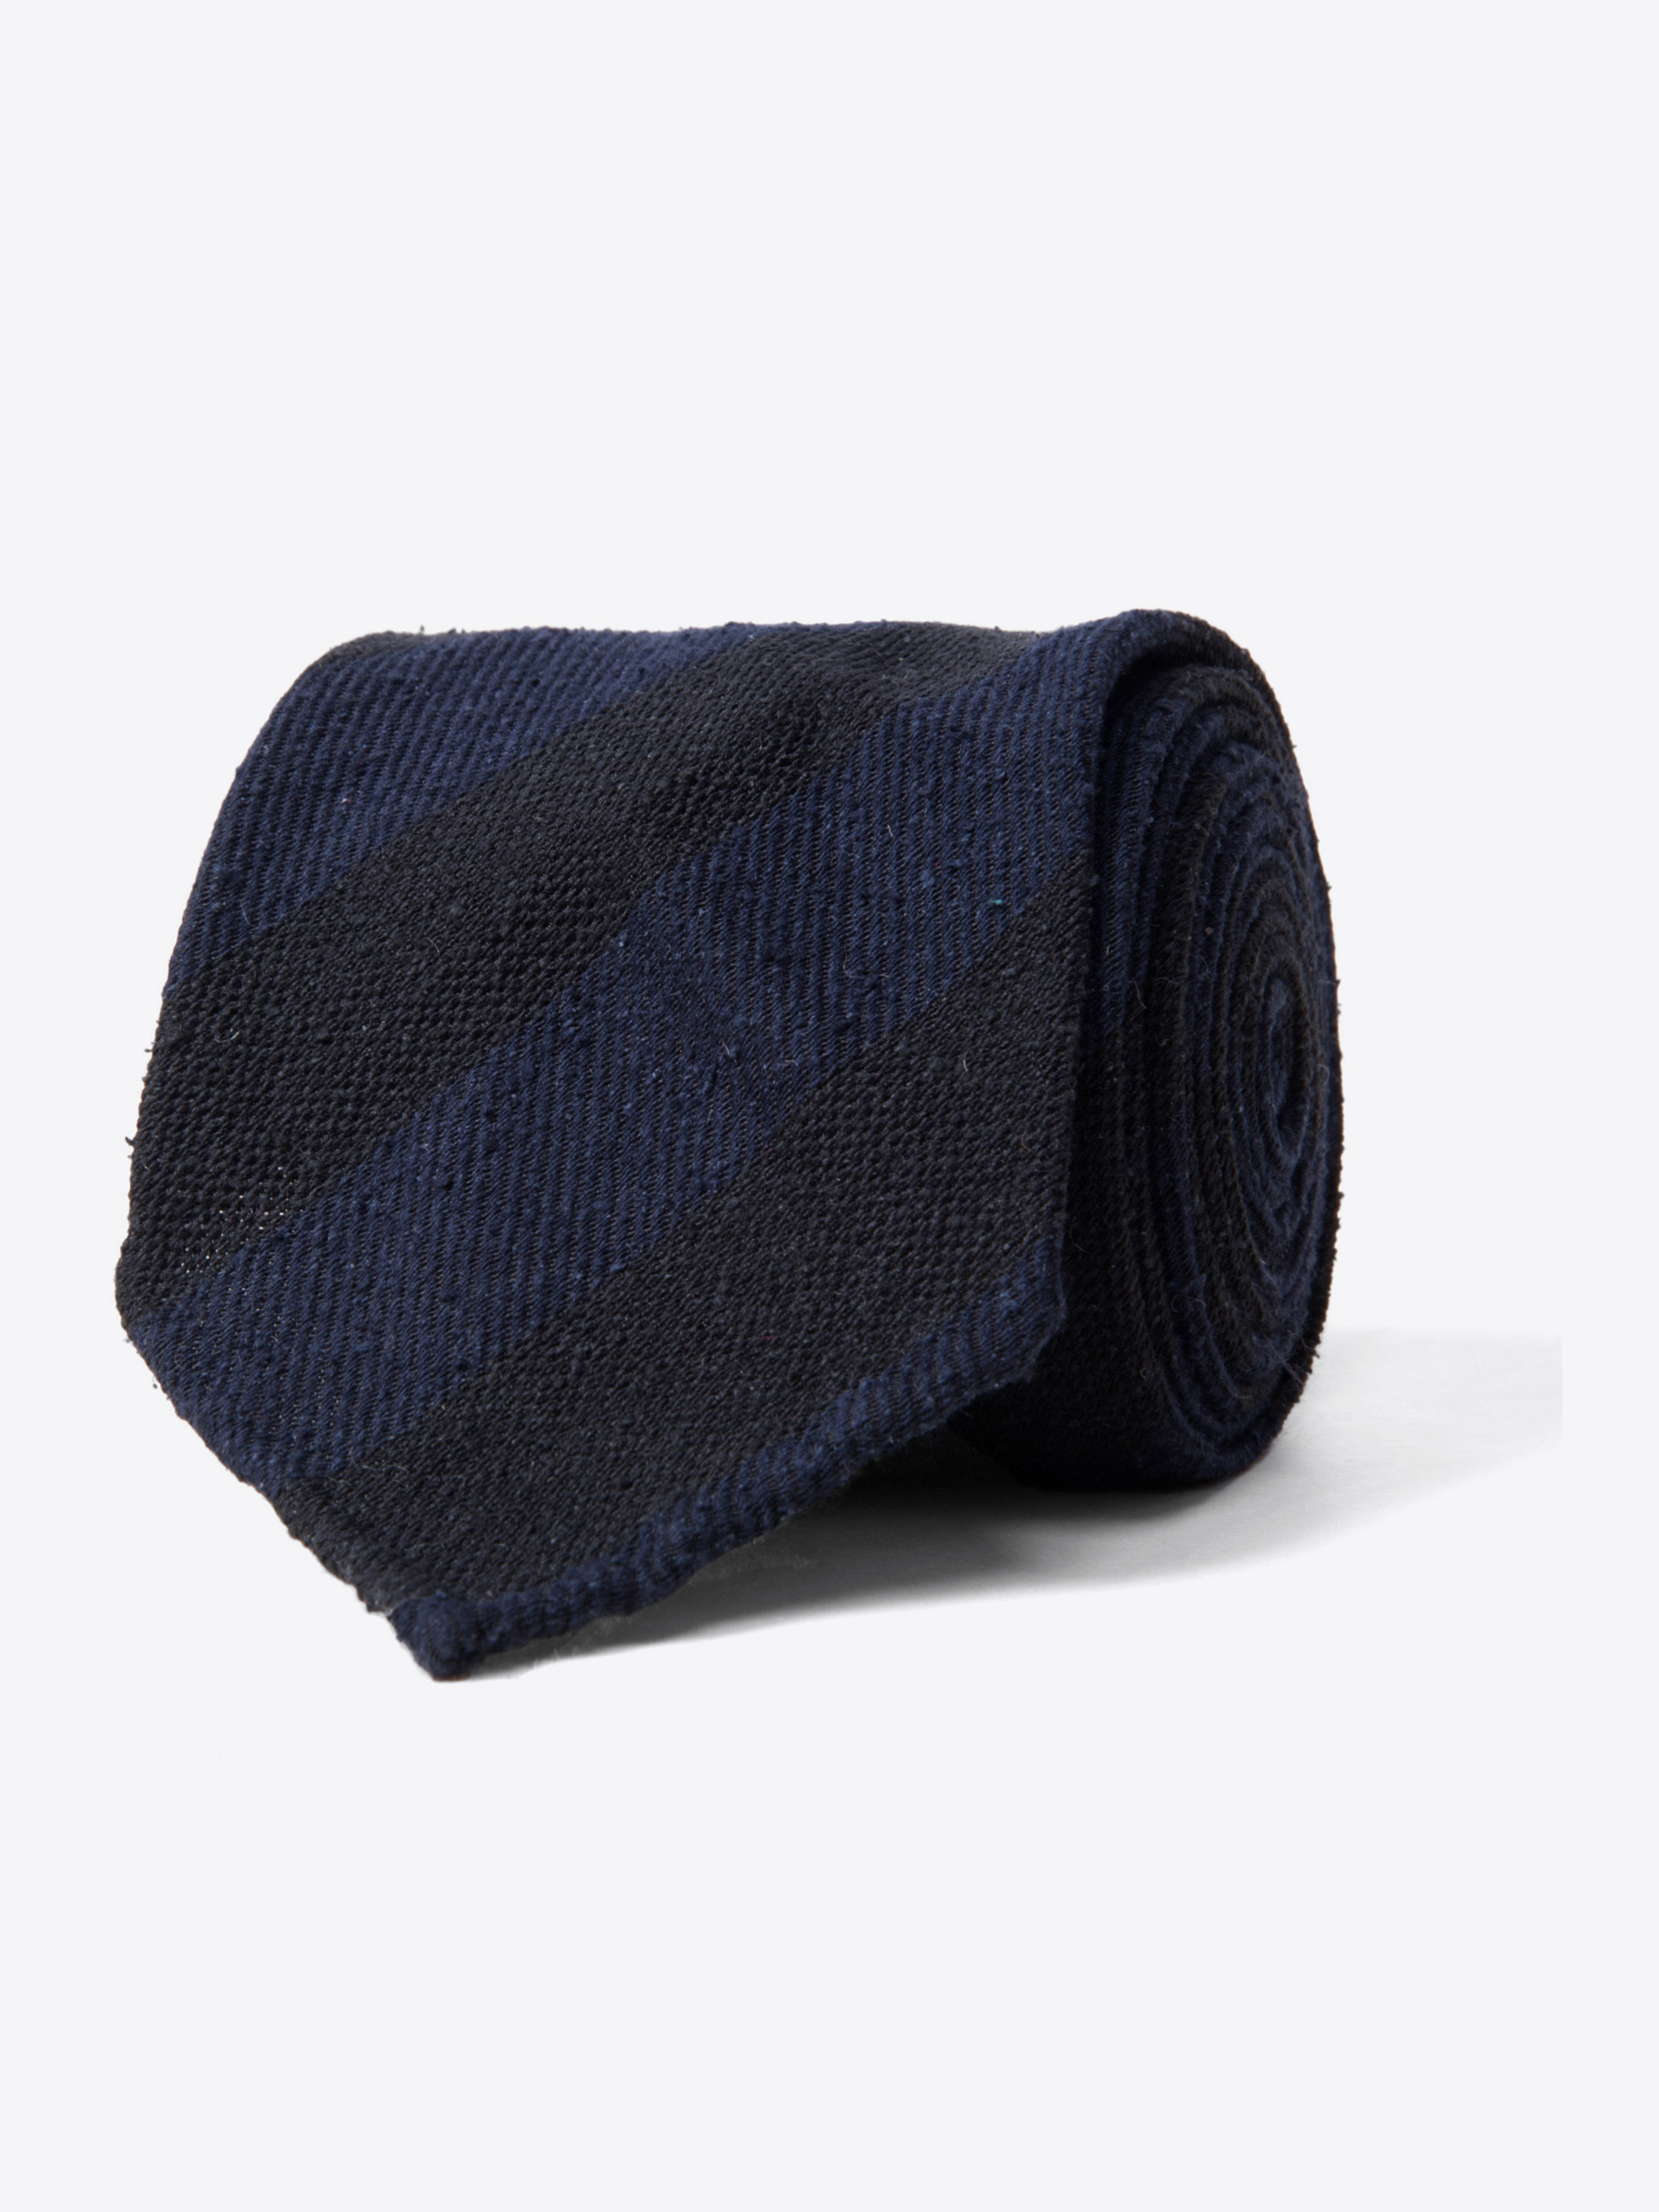 Zoom Image of Navy Tonal Stripe Raw Silk Tie